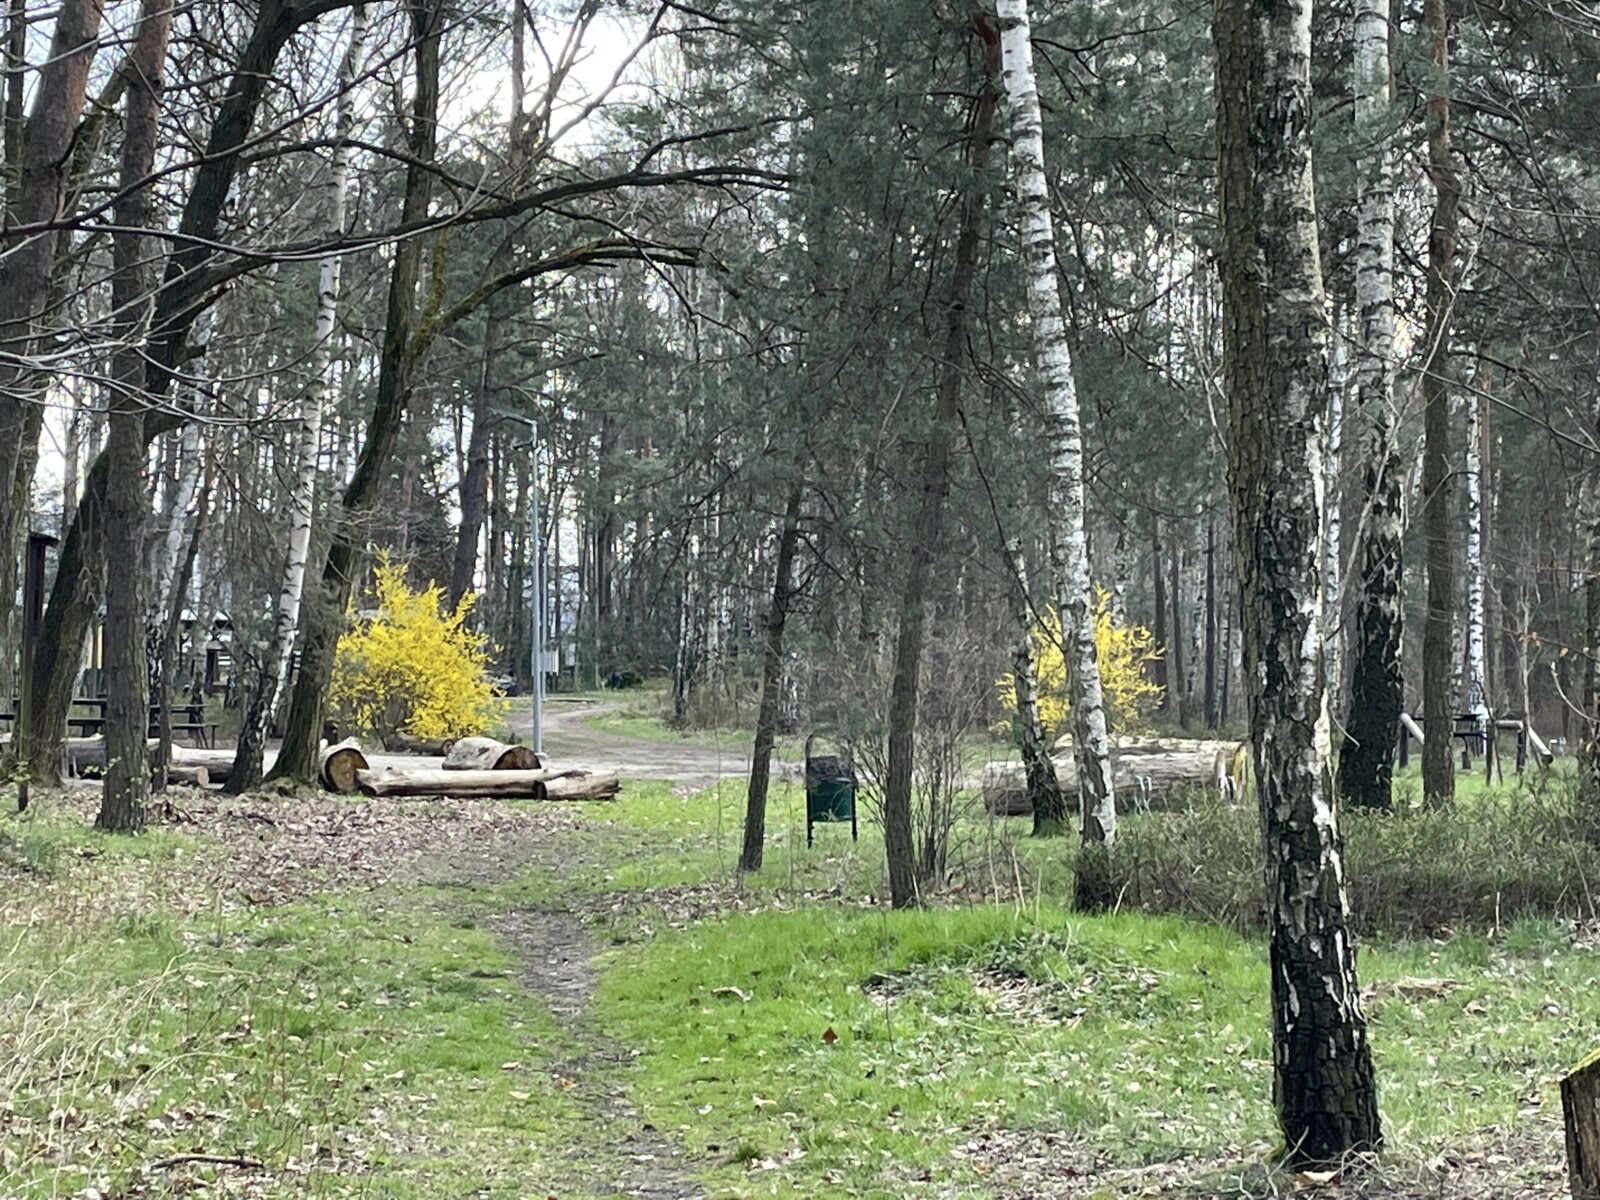 Park Piaskownia w Żorach